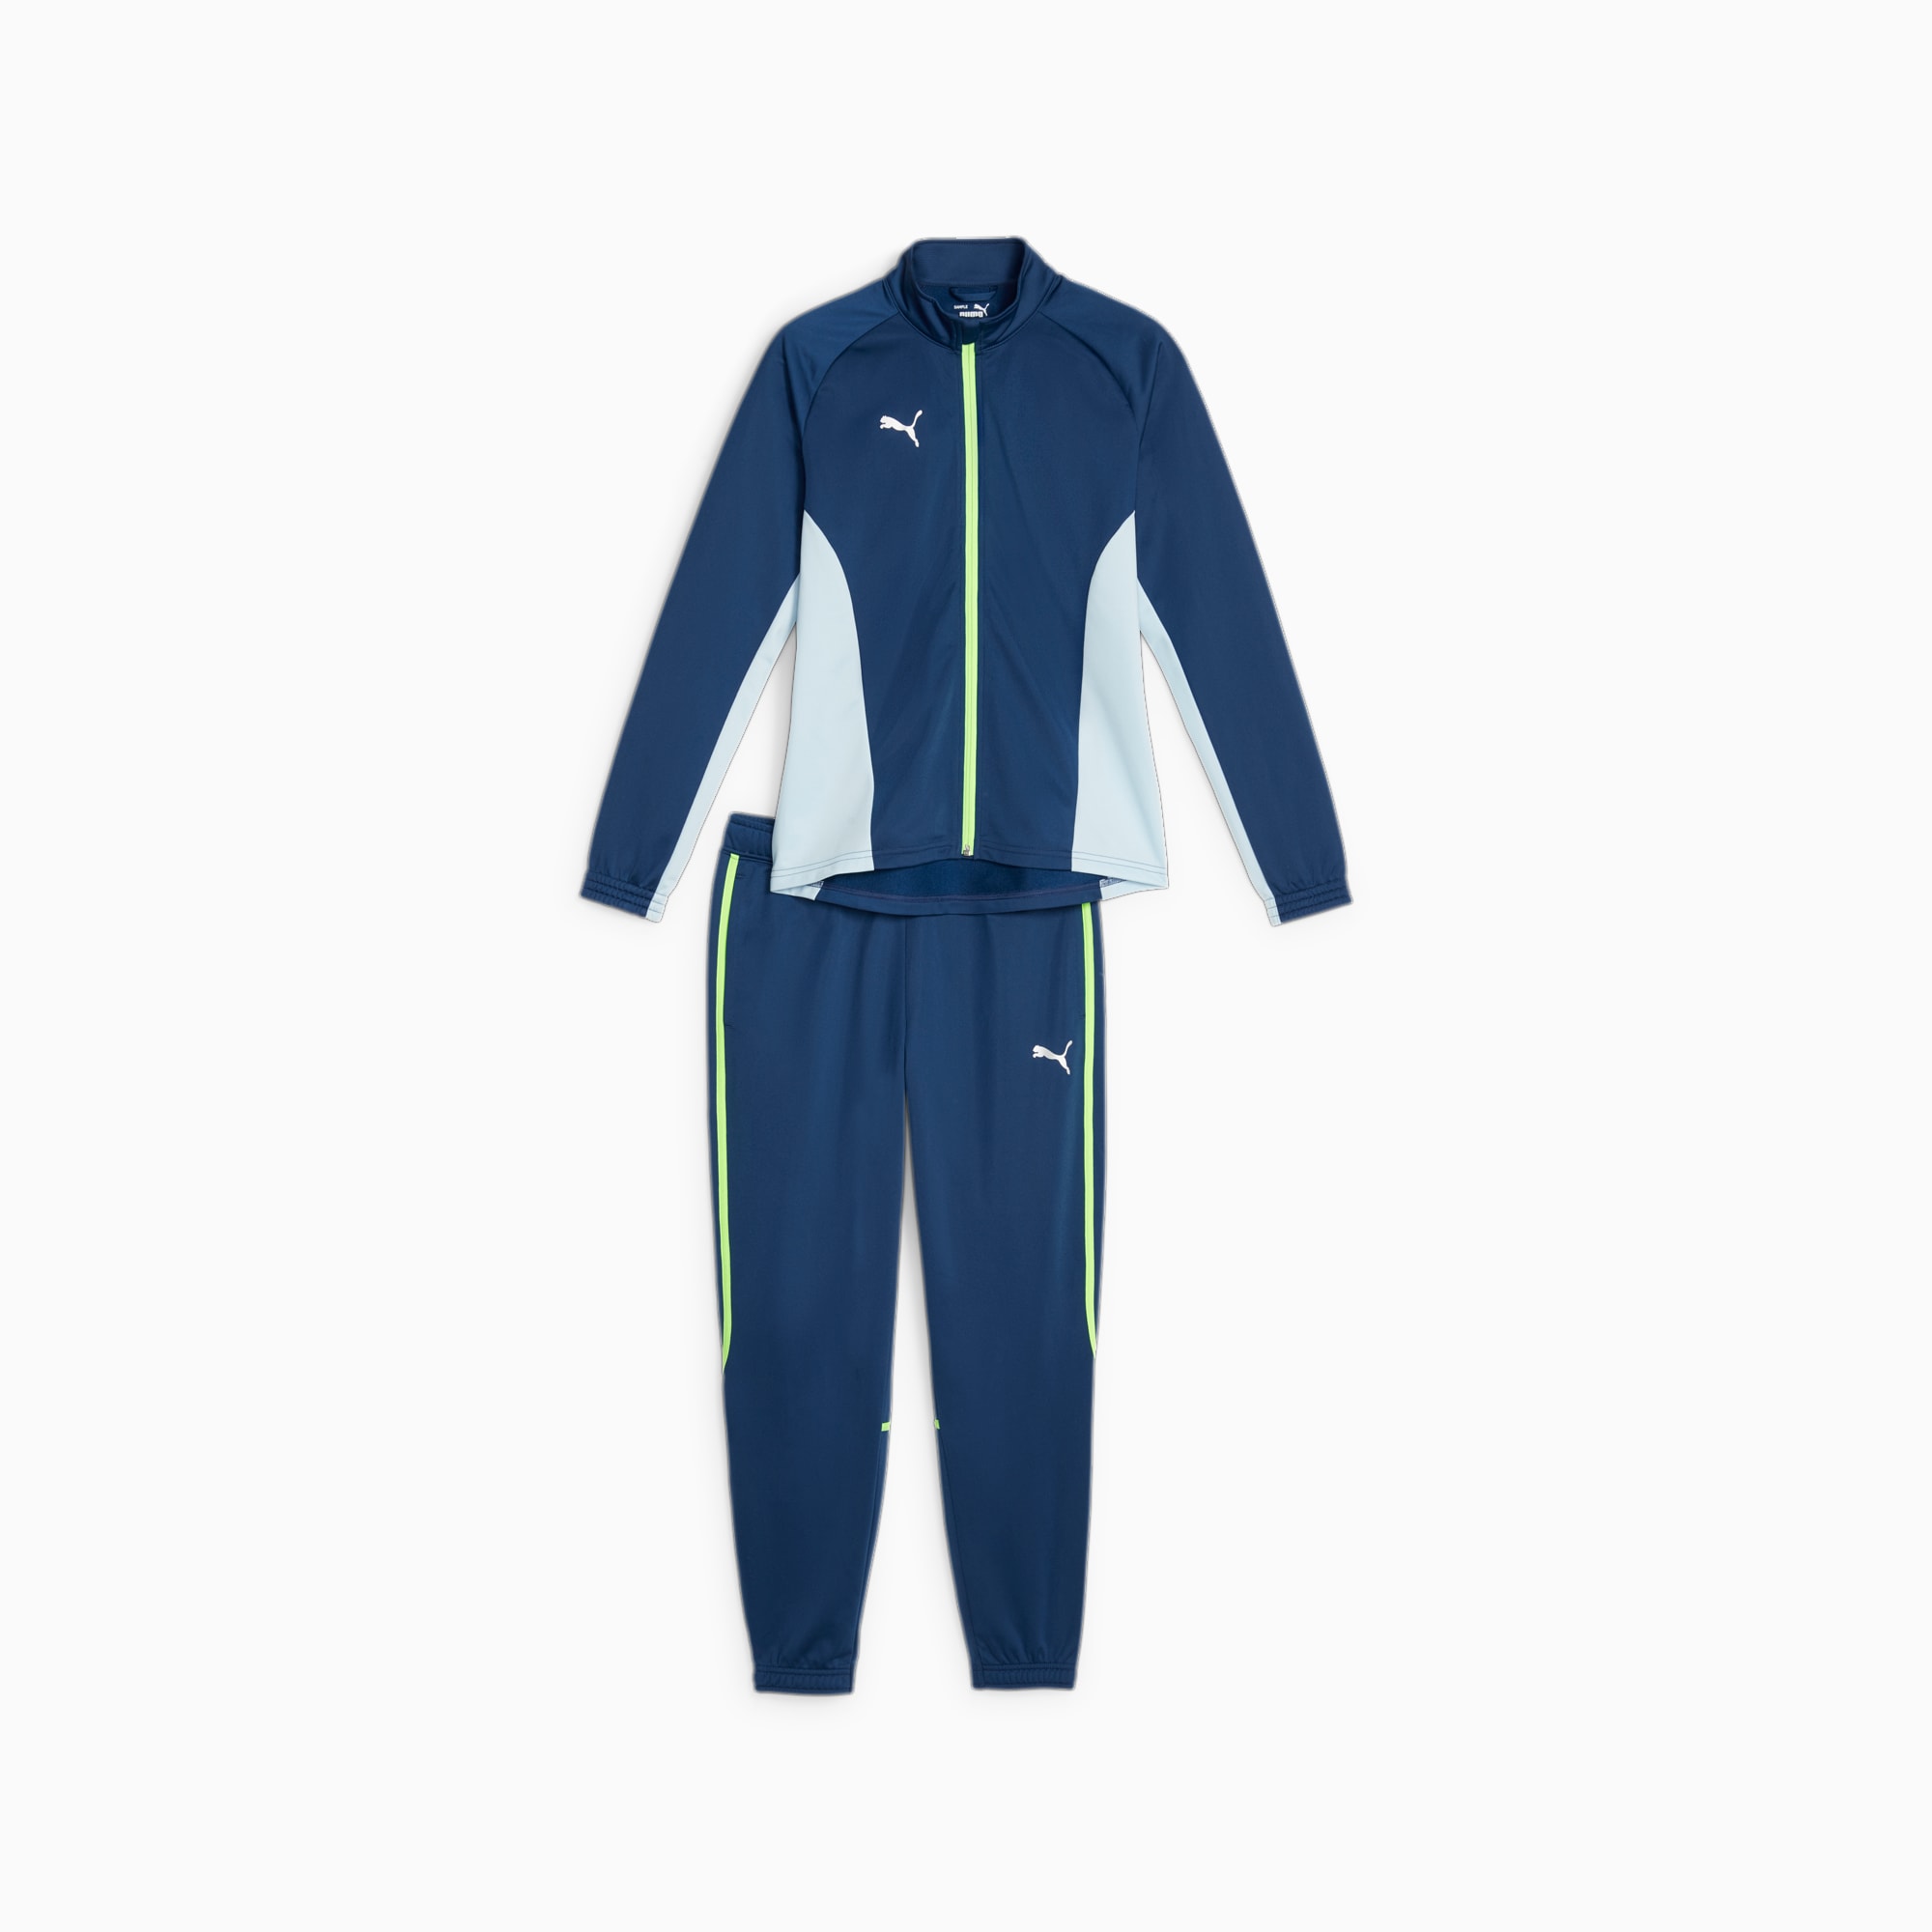 PUMA IndividualBLAZE Fußball Trainingsanzug, Blau/Silber, Größe: S, Kleidung